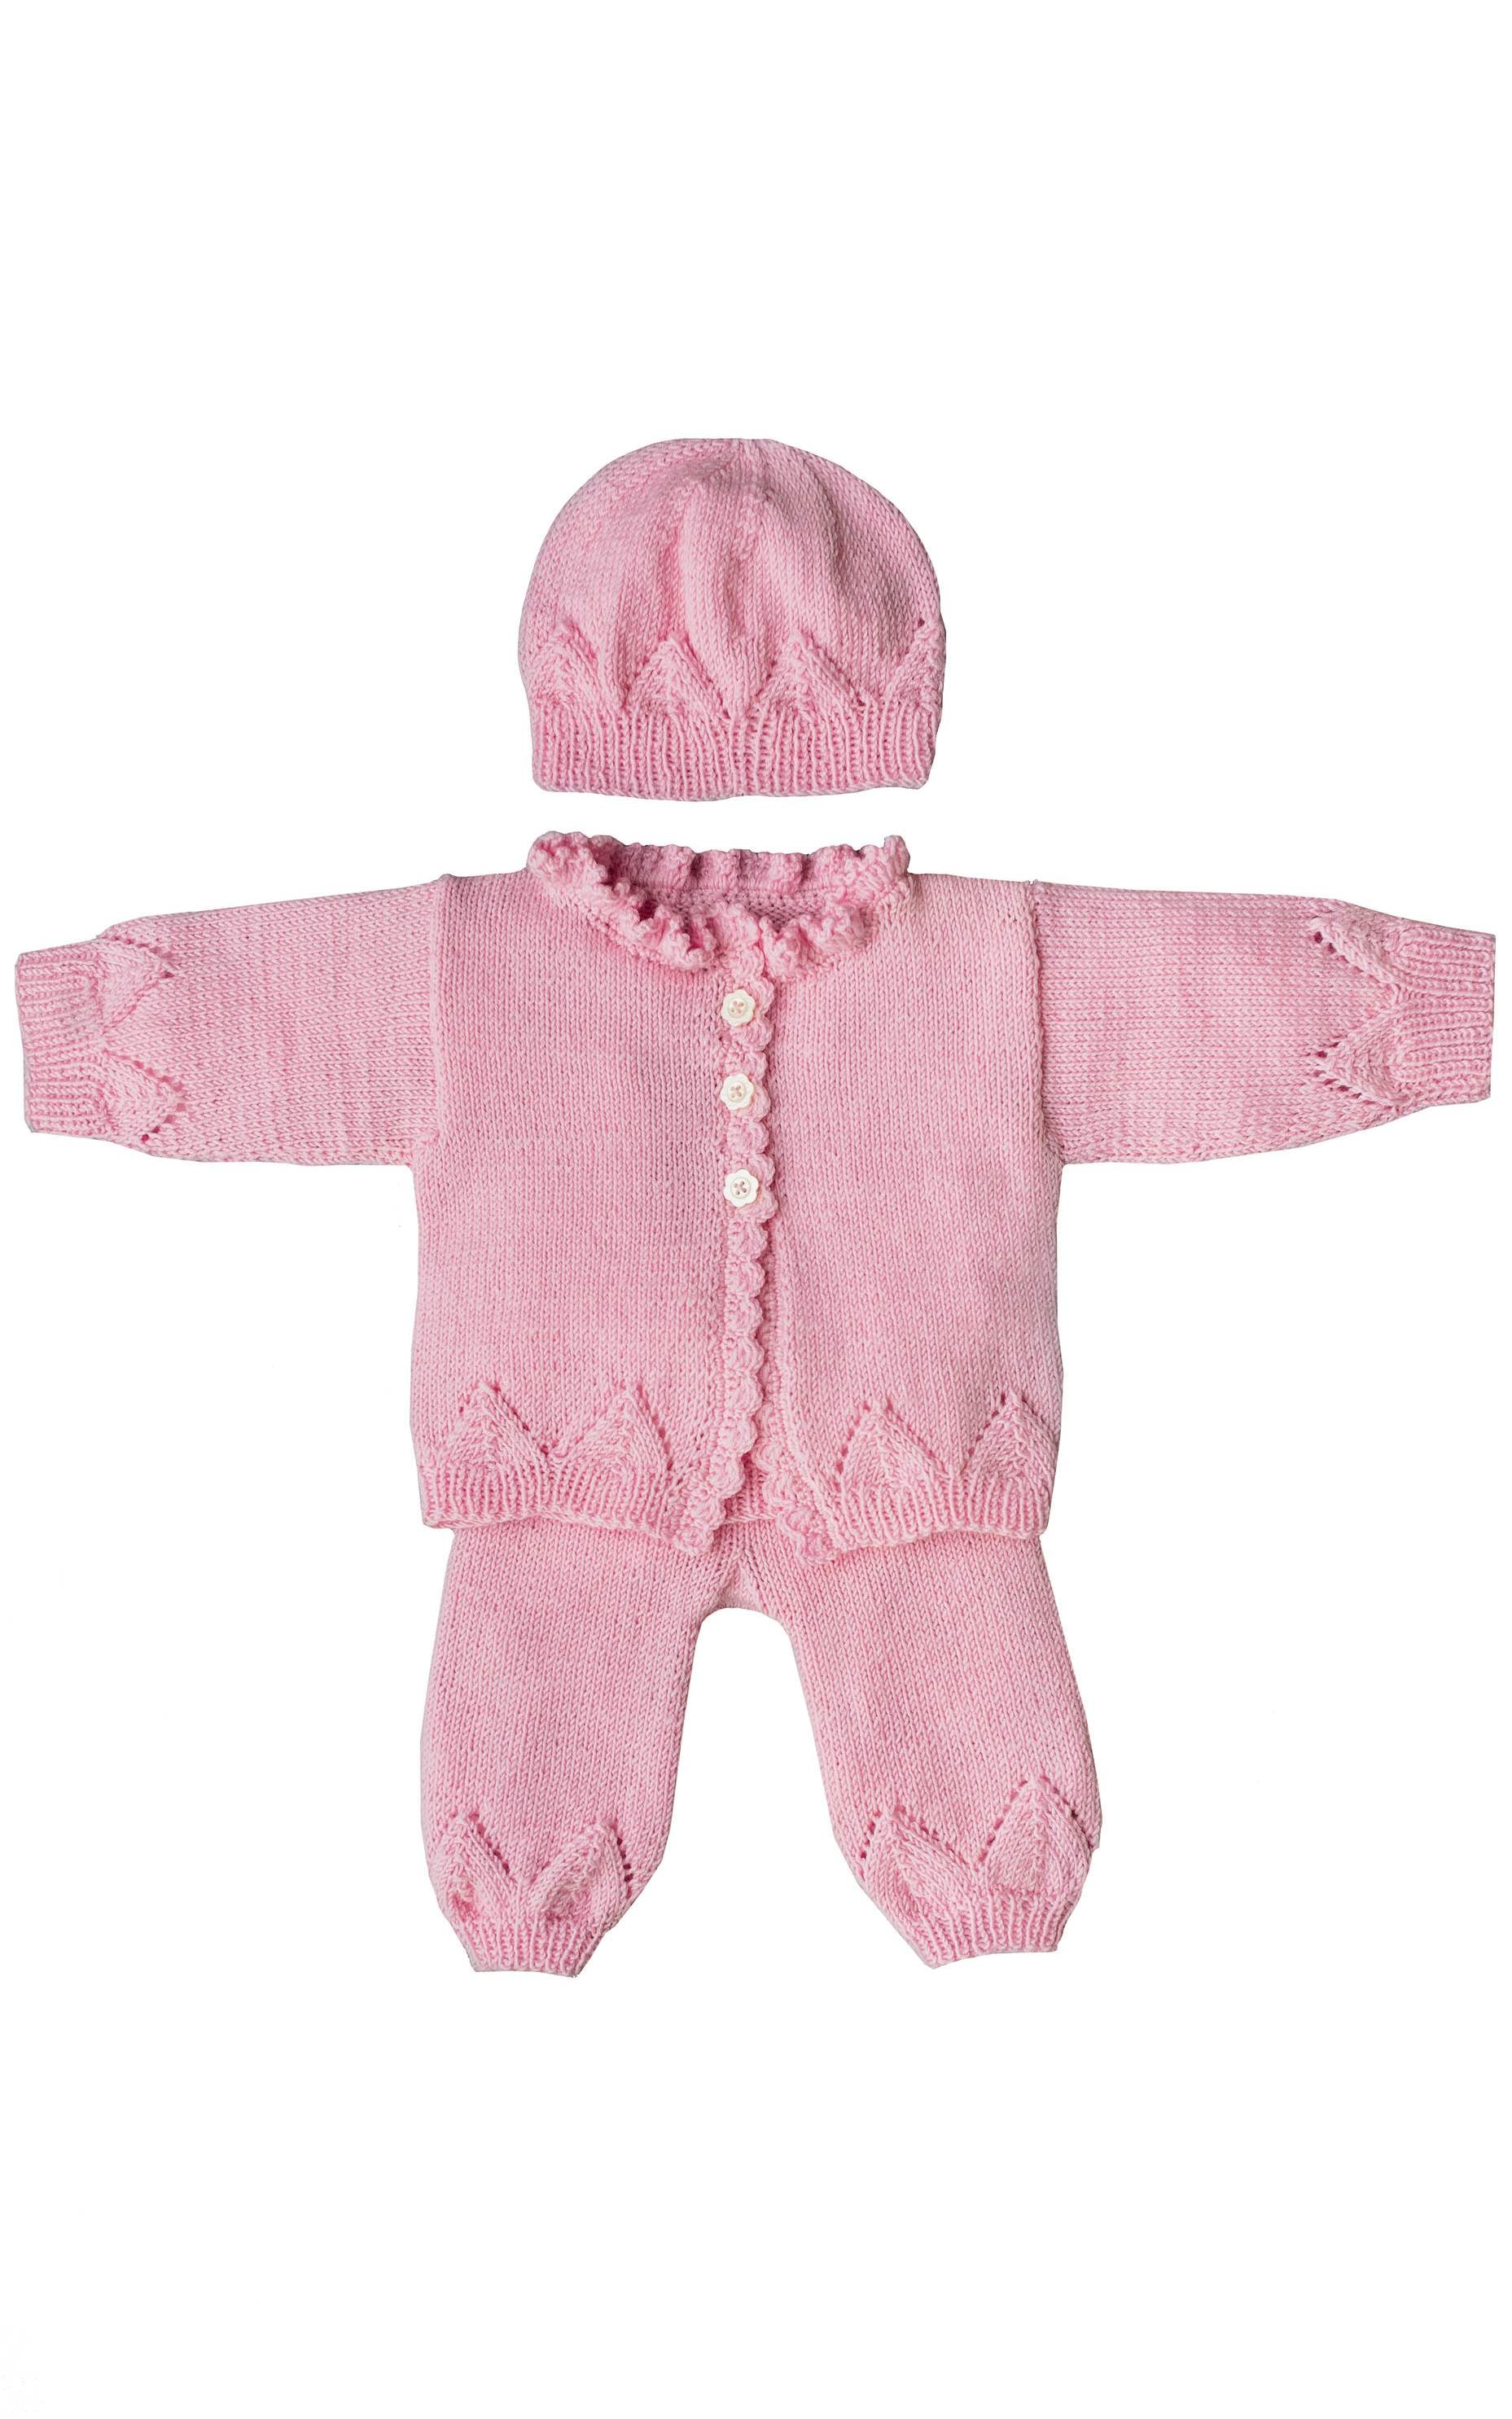 LANA GROSSA Strickset Baby Jacke mit Ajourmuster - Strickset